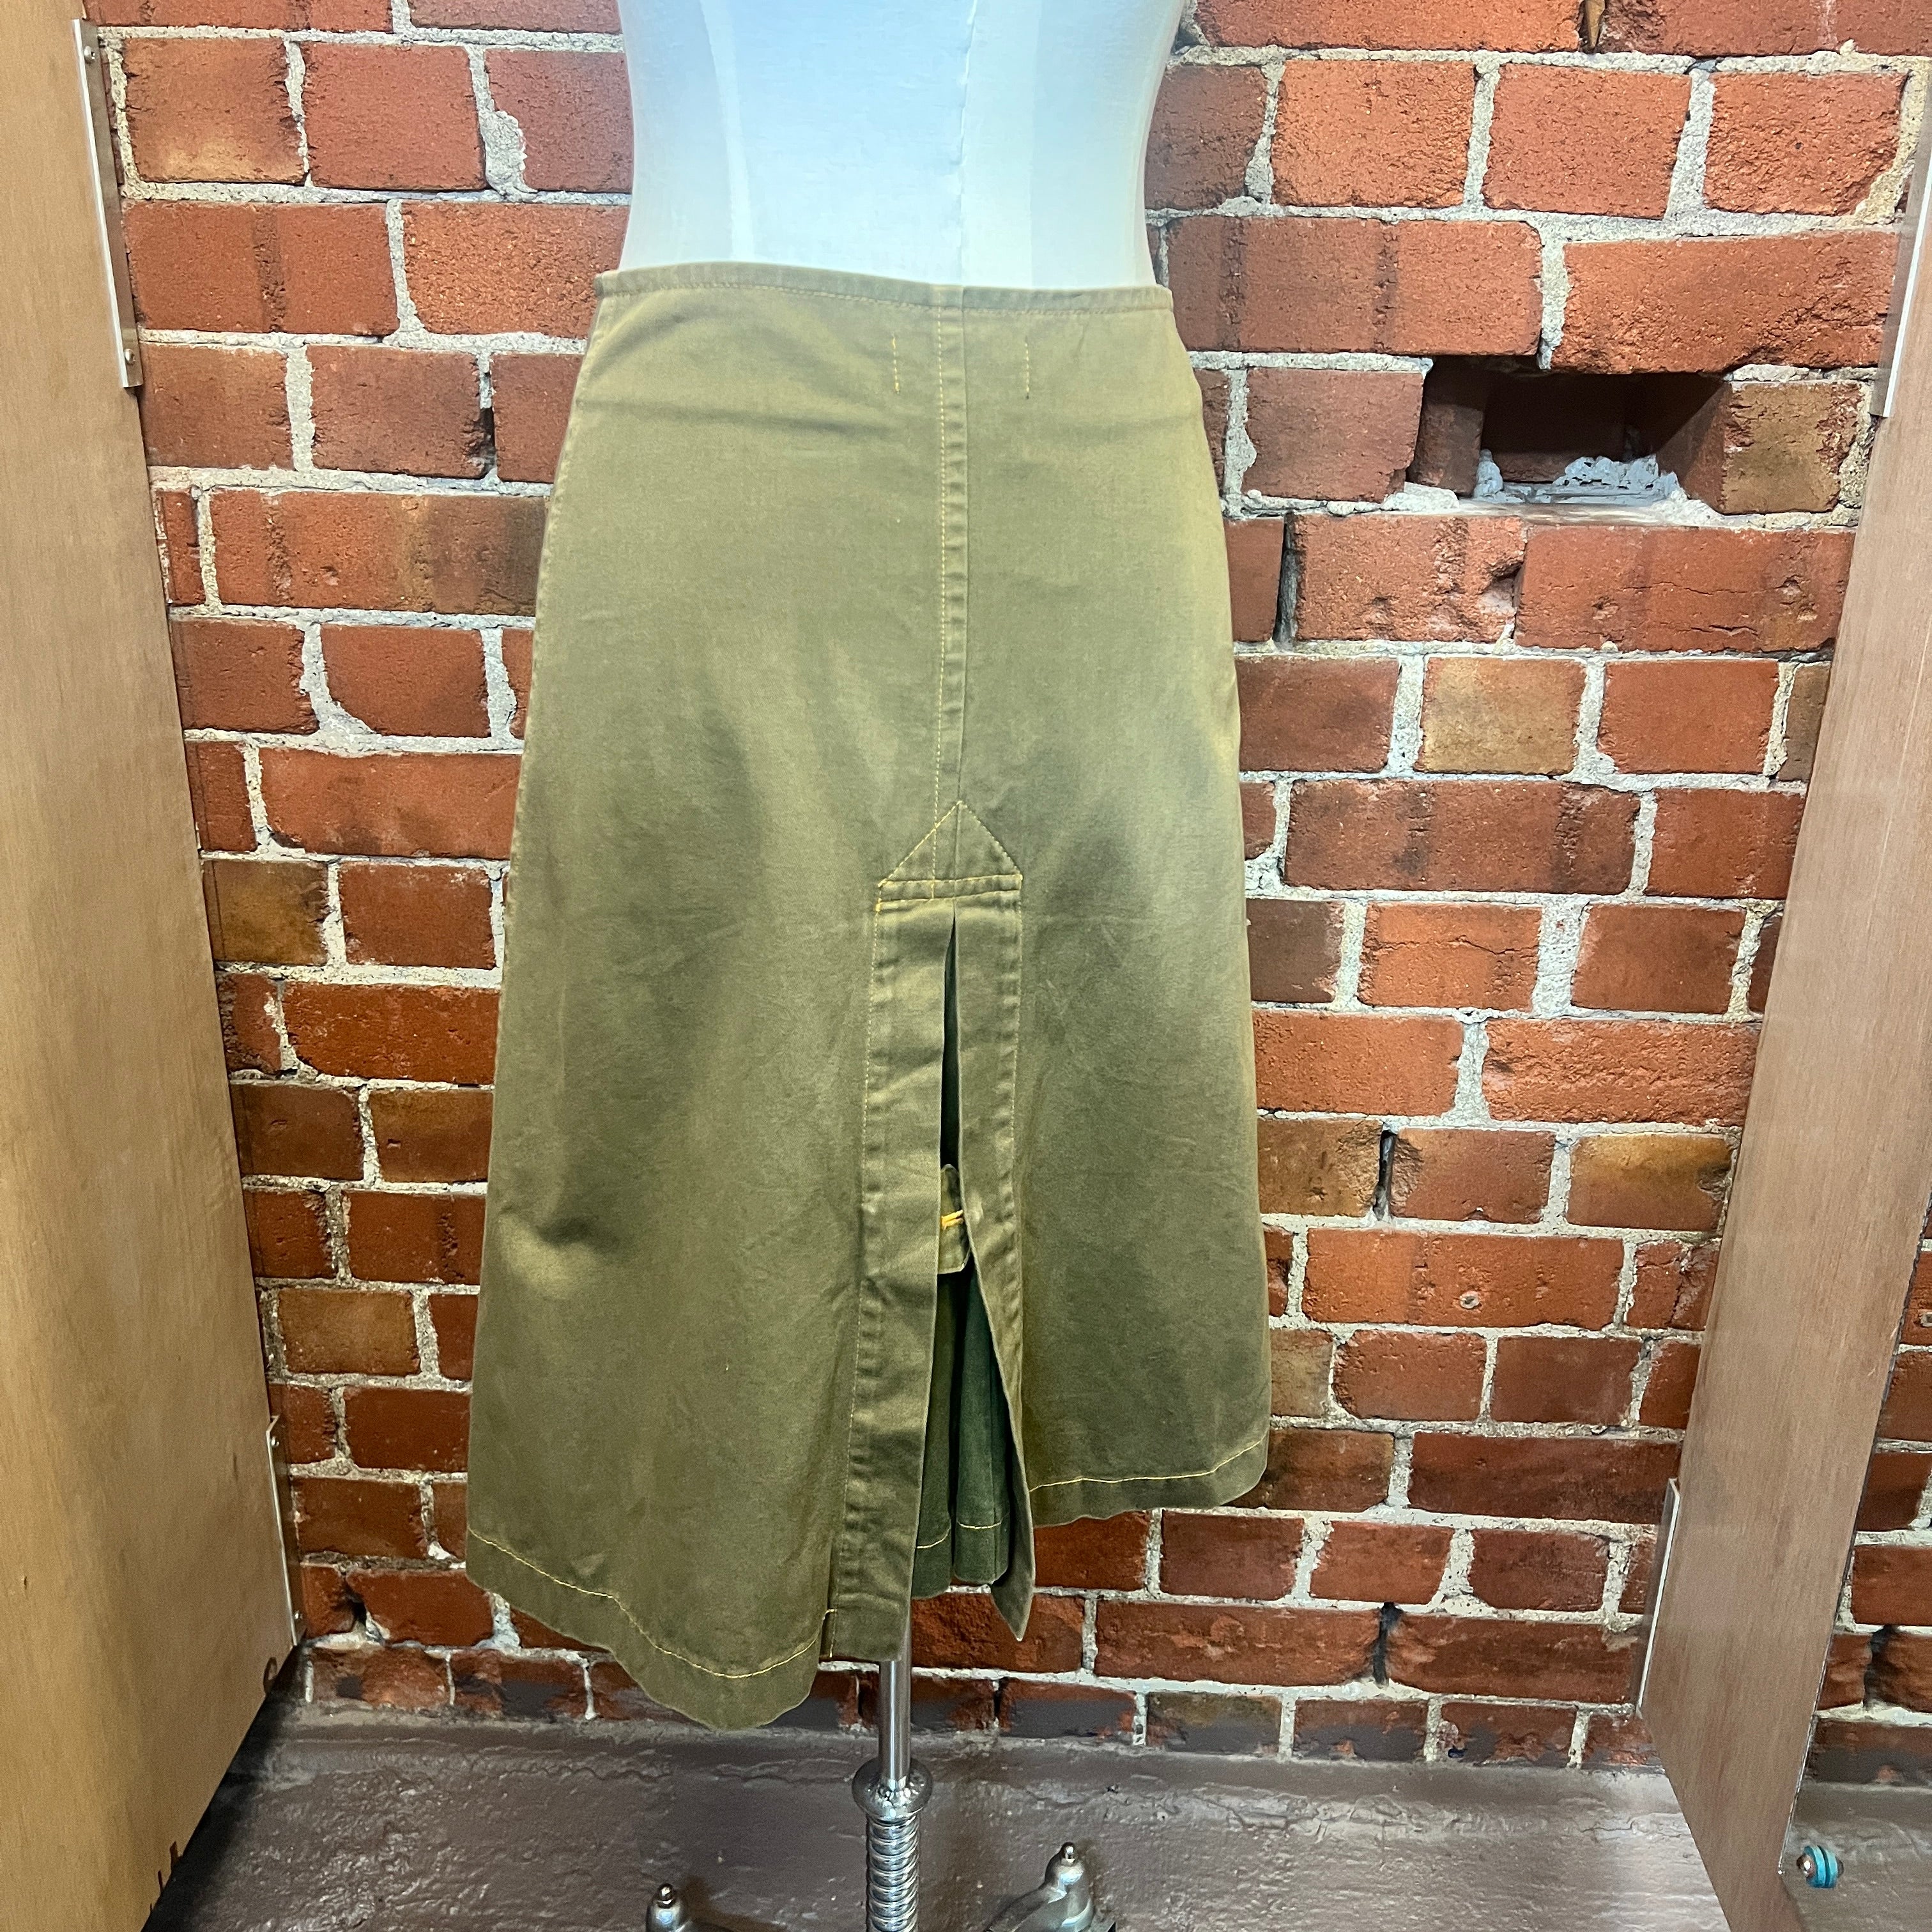 COMME DES GARCONS trench coat skirt